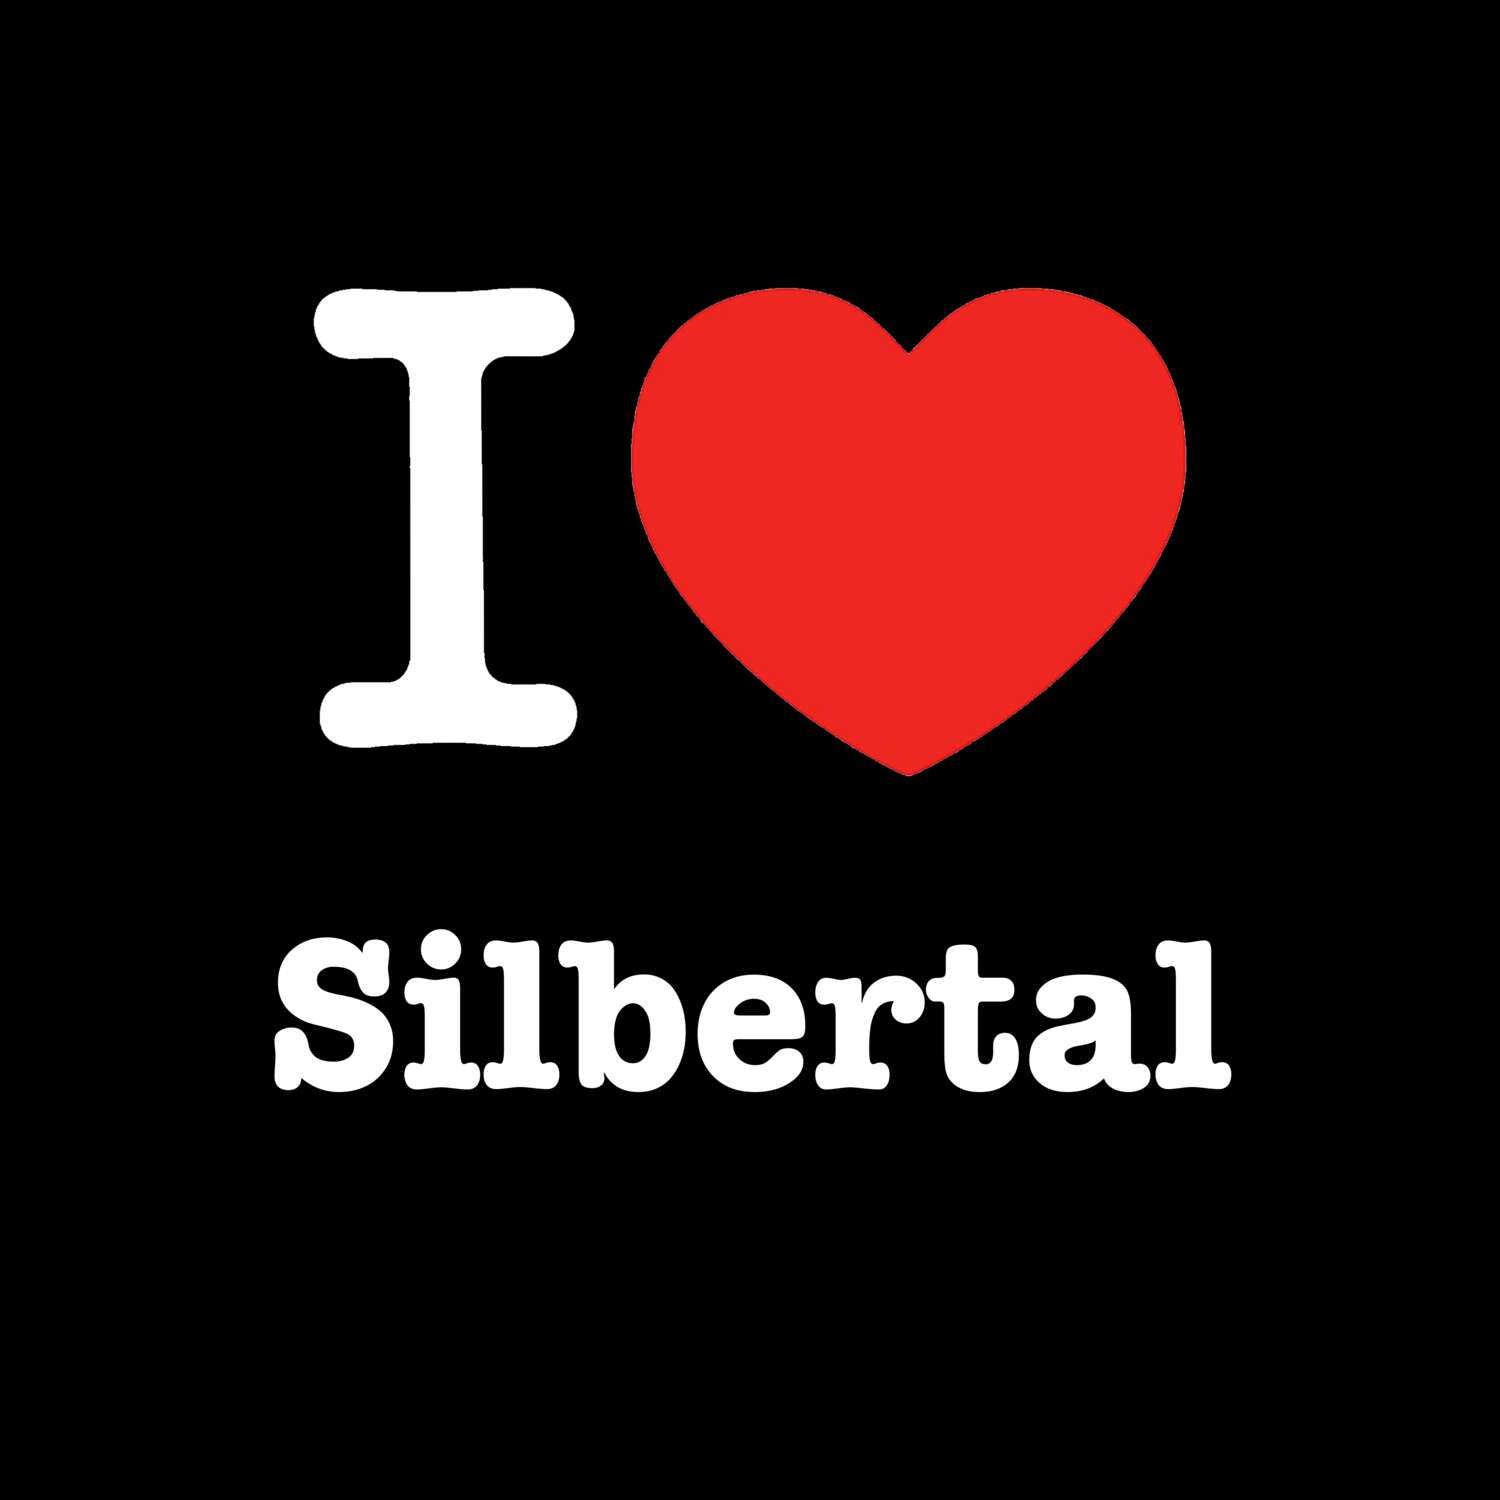 Silbertal T-Shirt »I love«